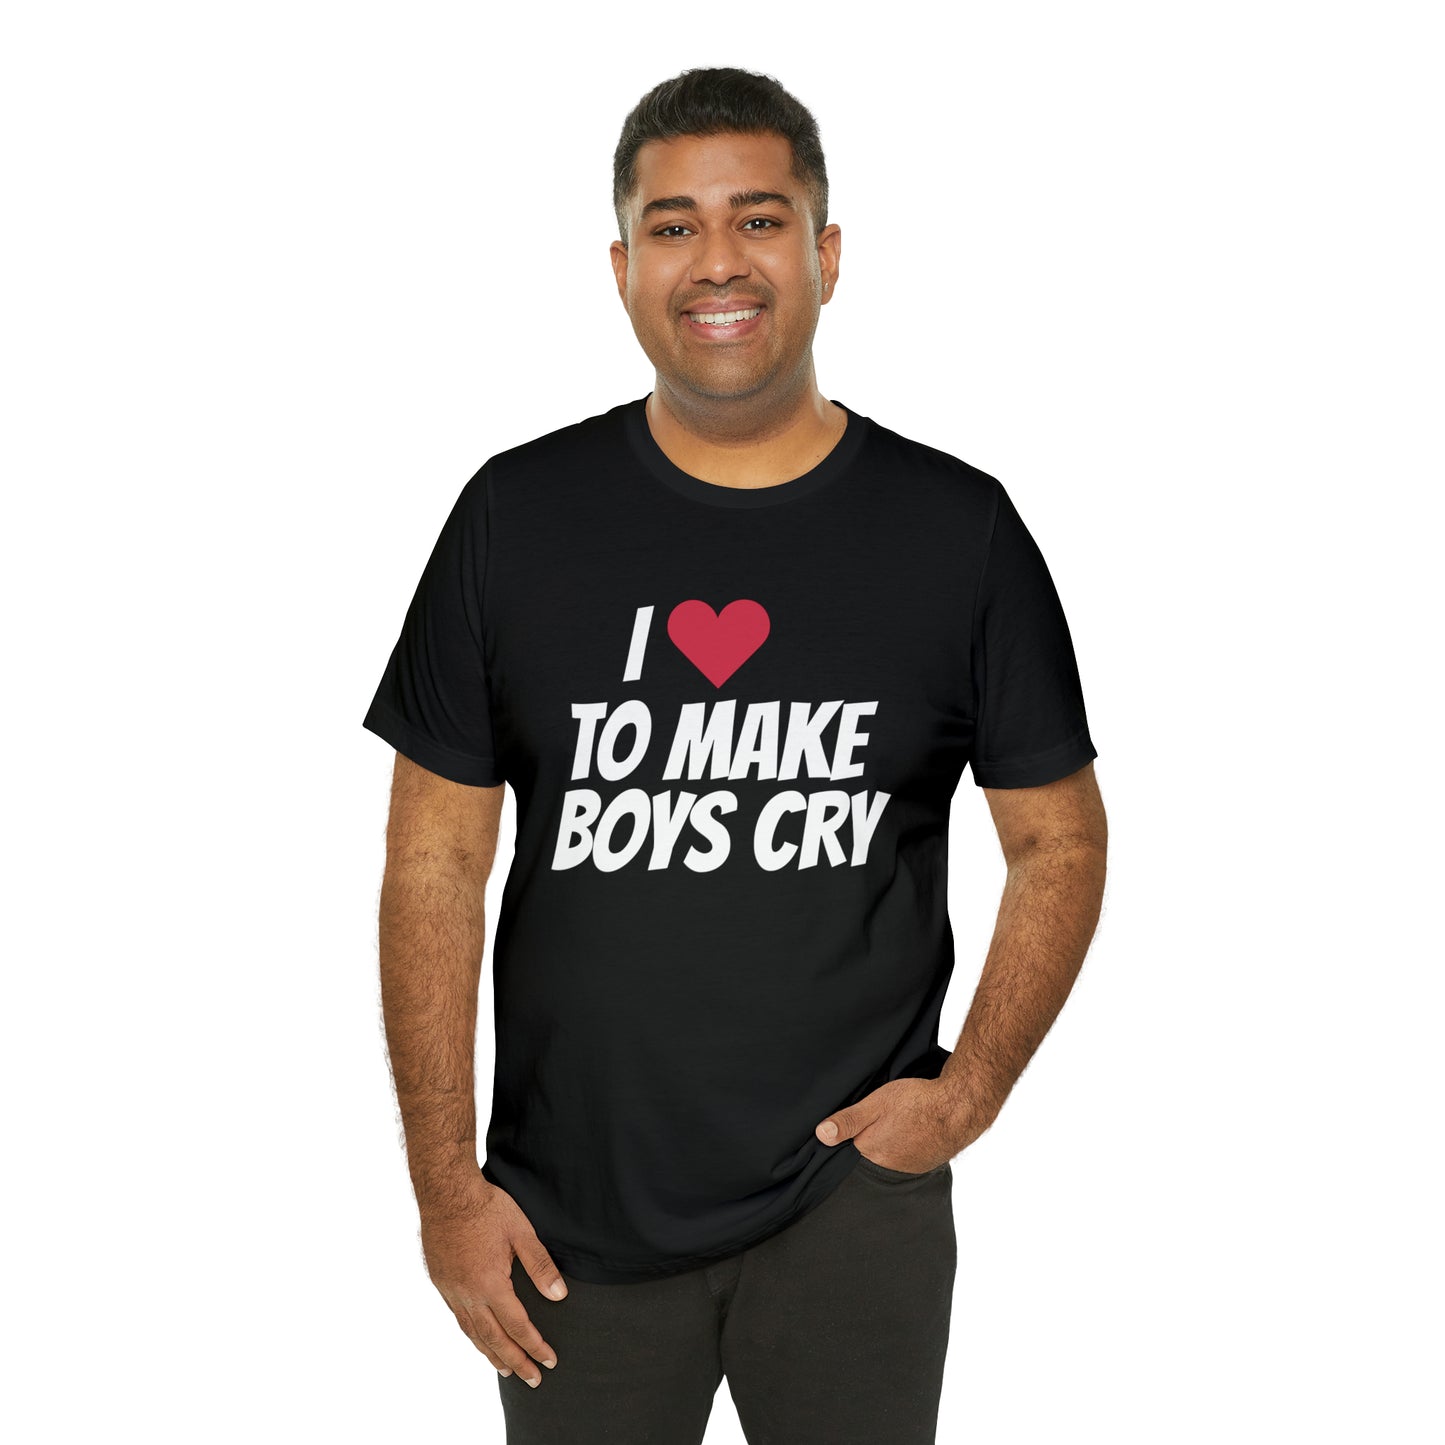 Make Boys Cry - Unisex Jersey Short Sleeve Tee